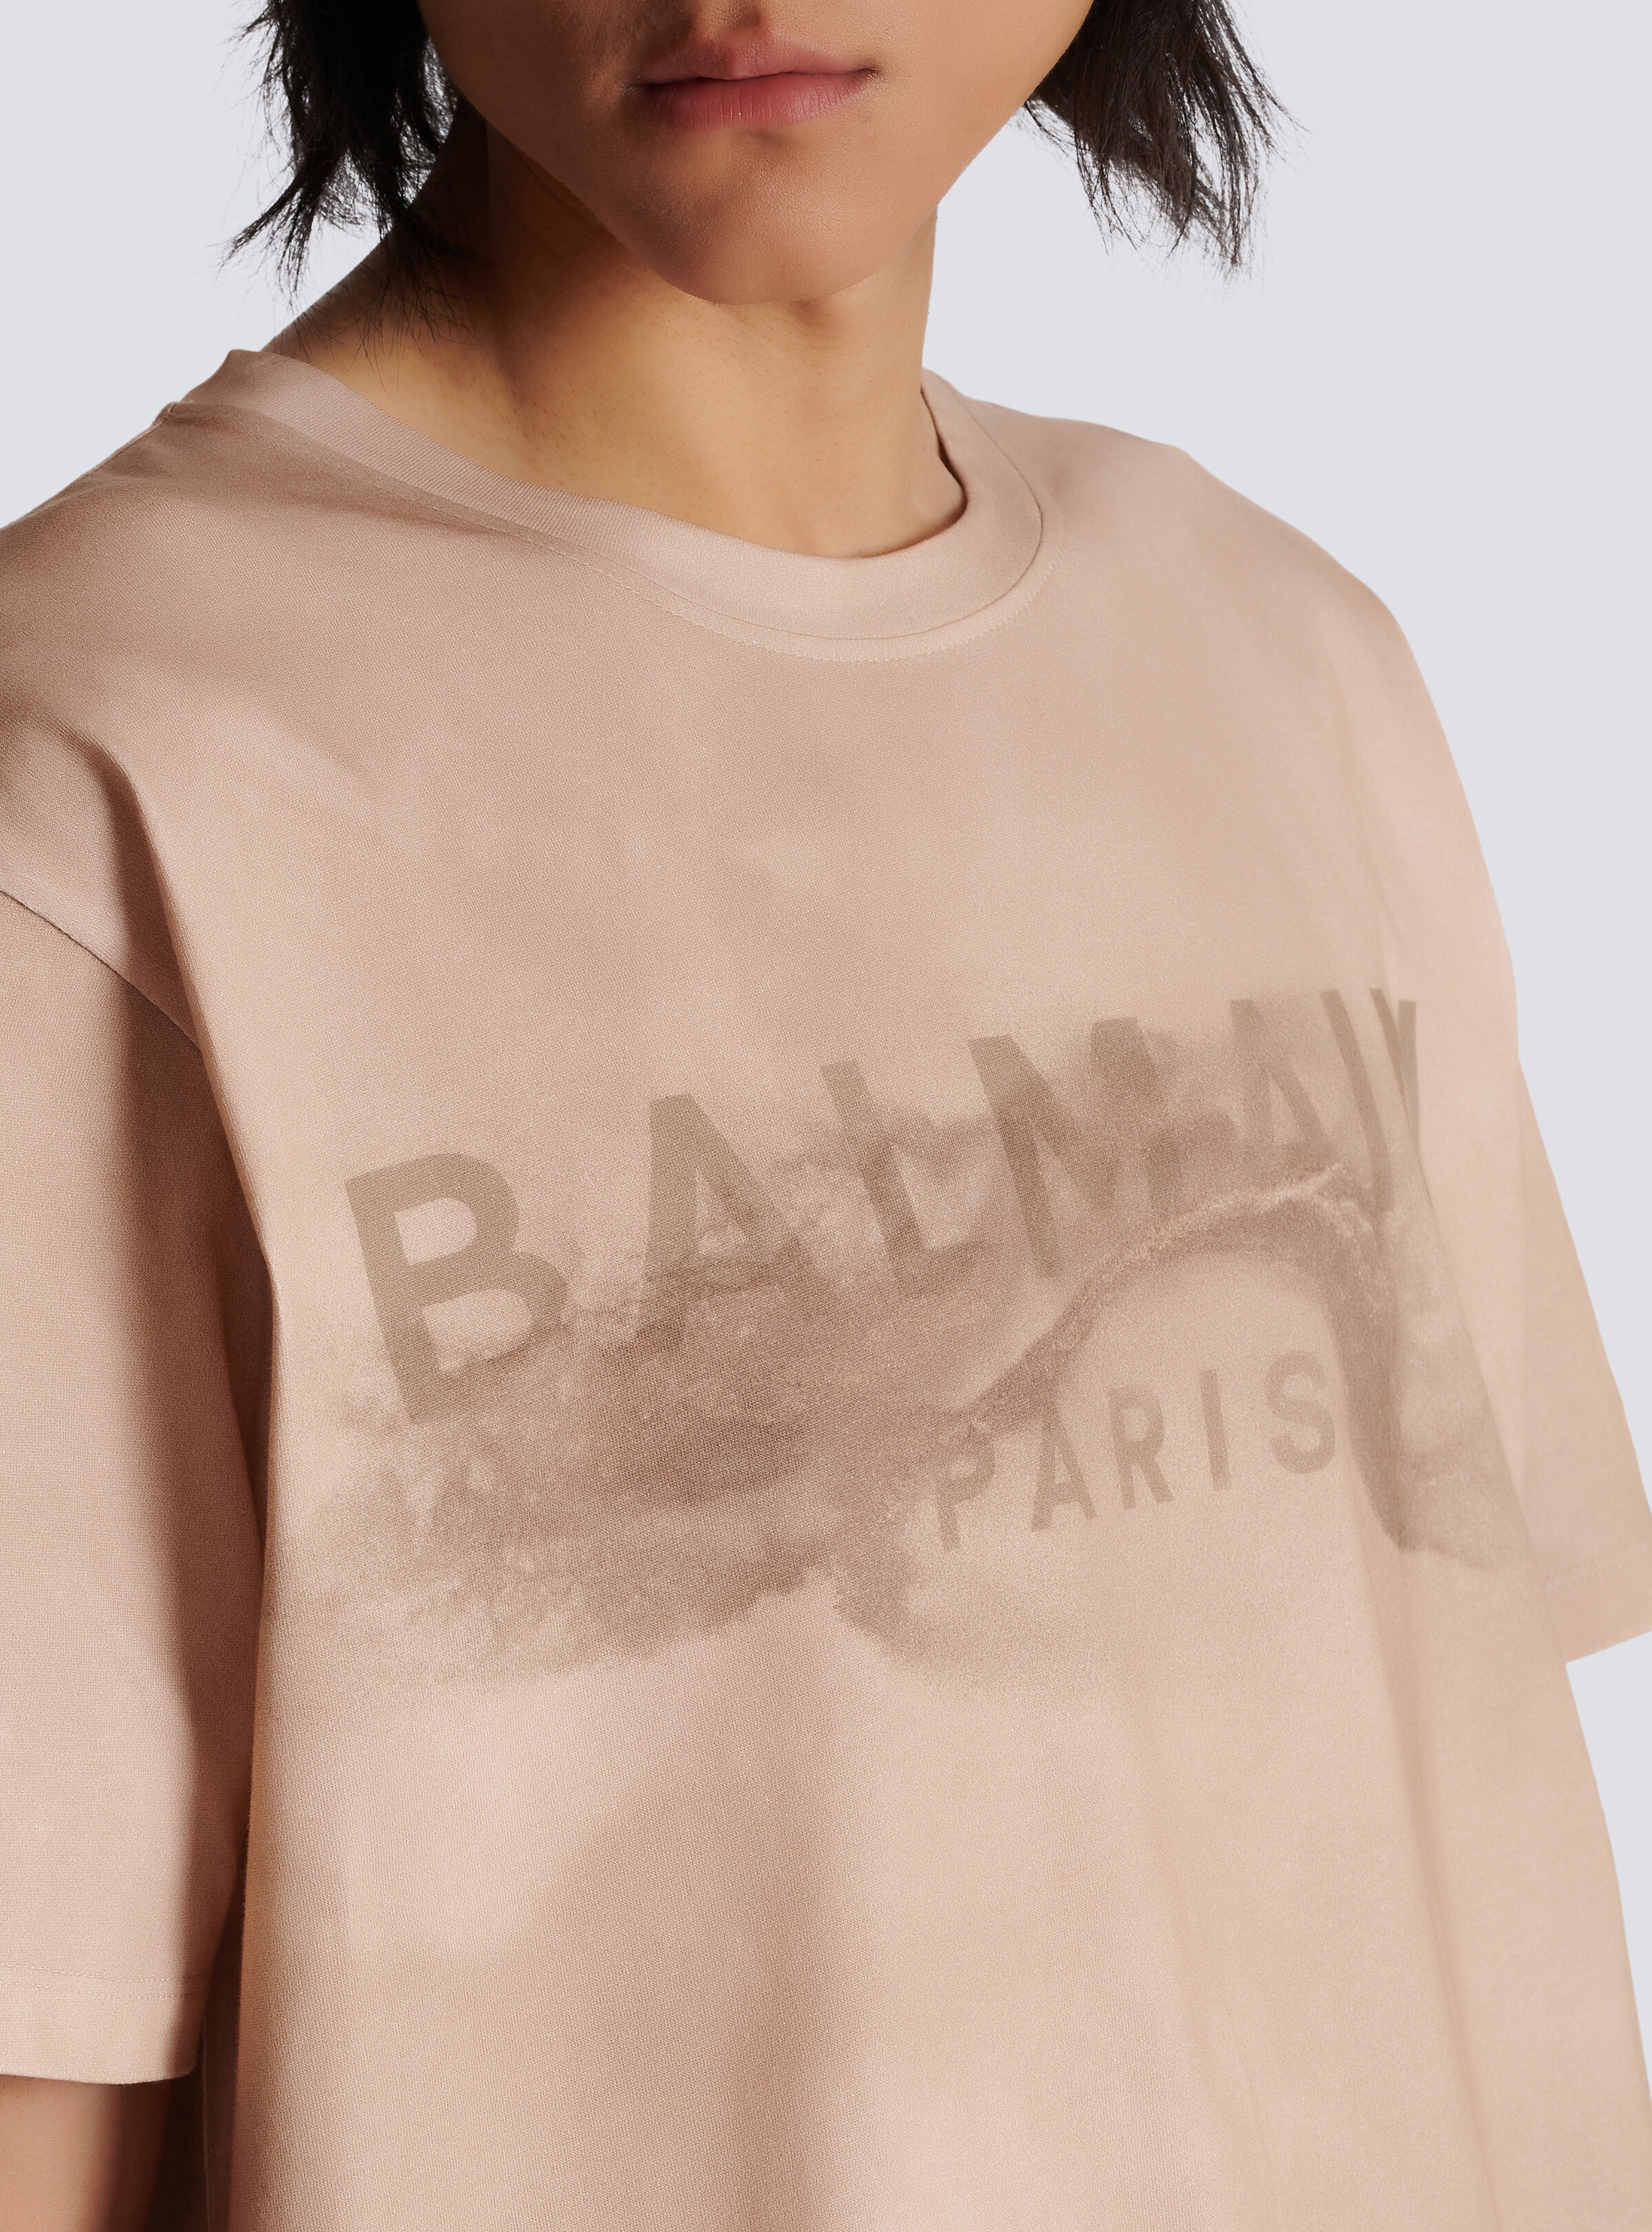 T-shirt in eco-responsible cotton with Balmain Paris desert logo - 7